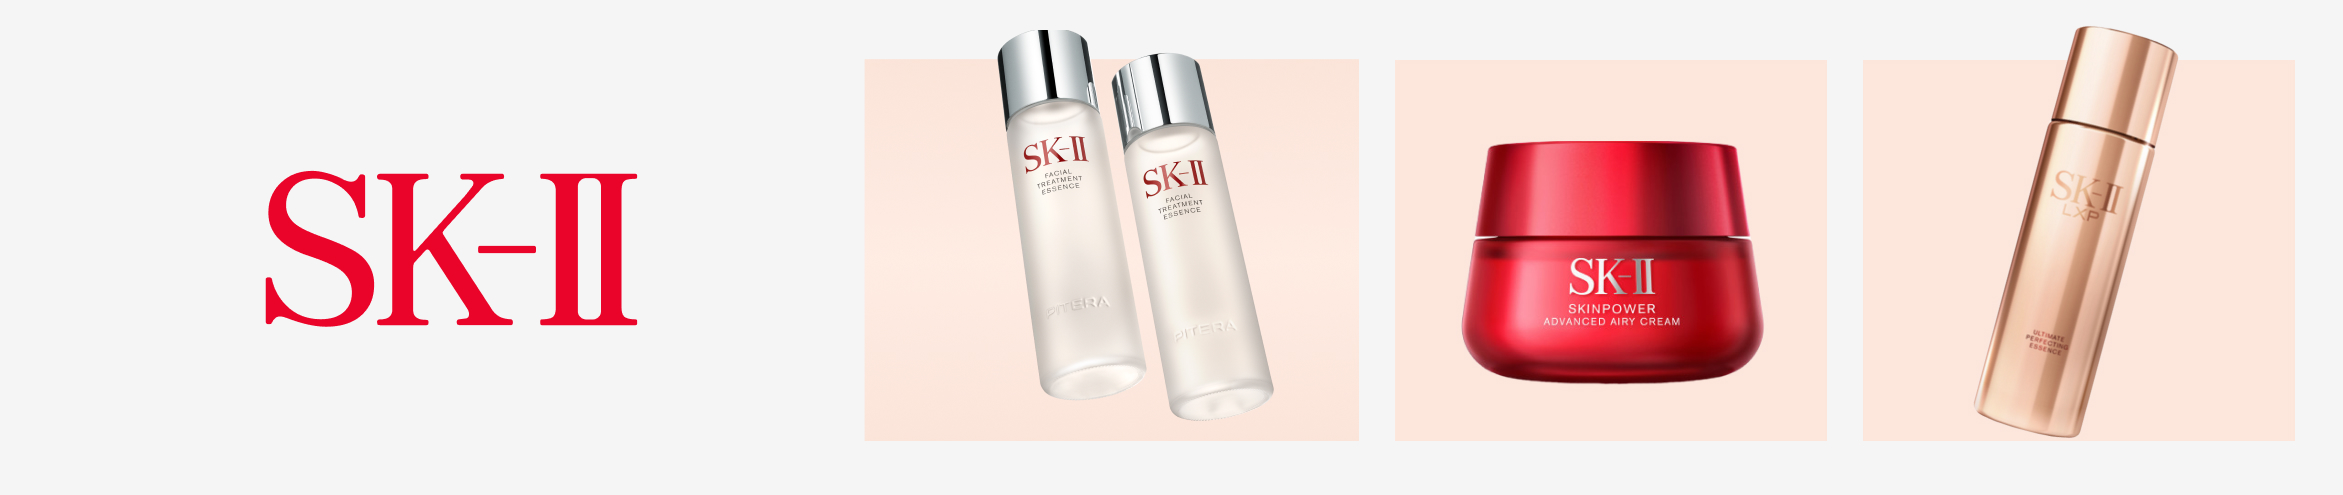 SK-II - Skin Care Value Kits